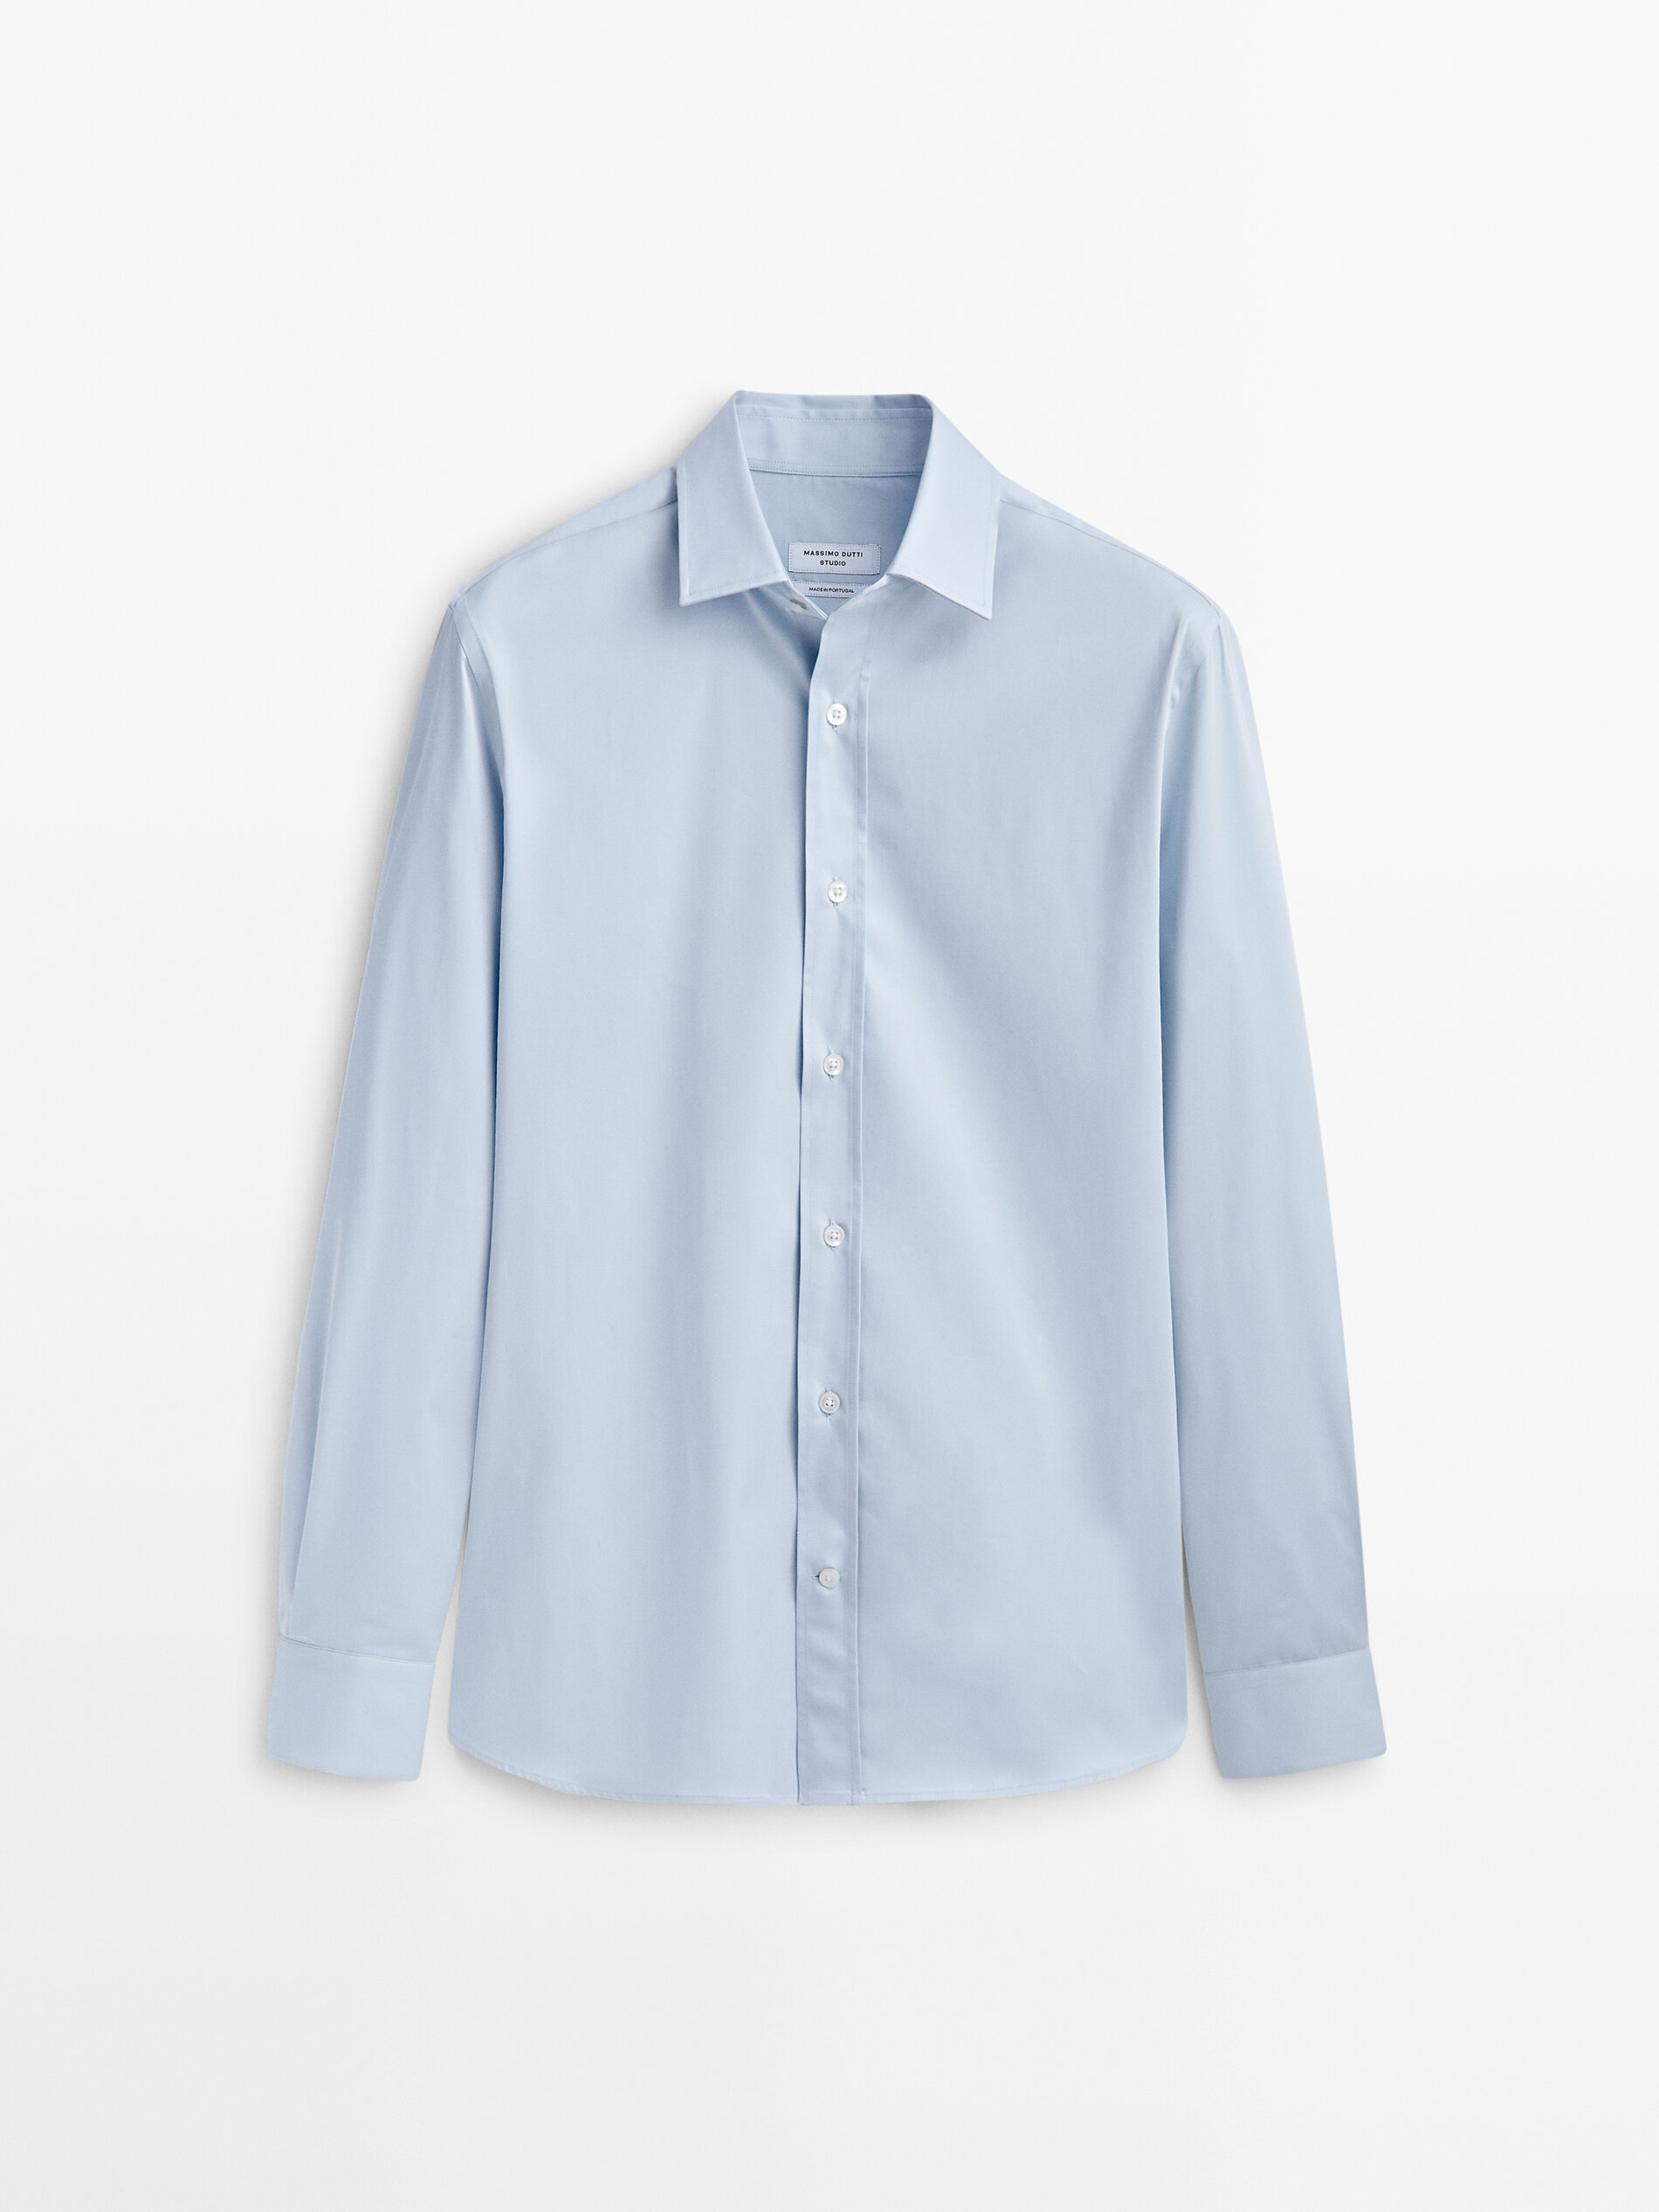 Рубашка мужская Massimo Dutti 840082440 голубая M (доставка из-за рубежа)